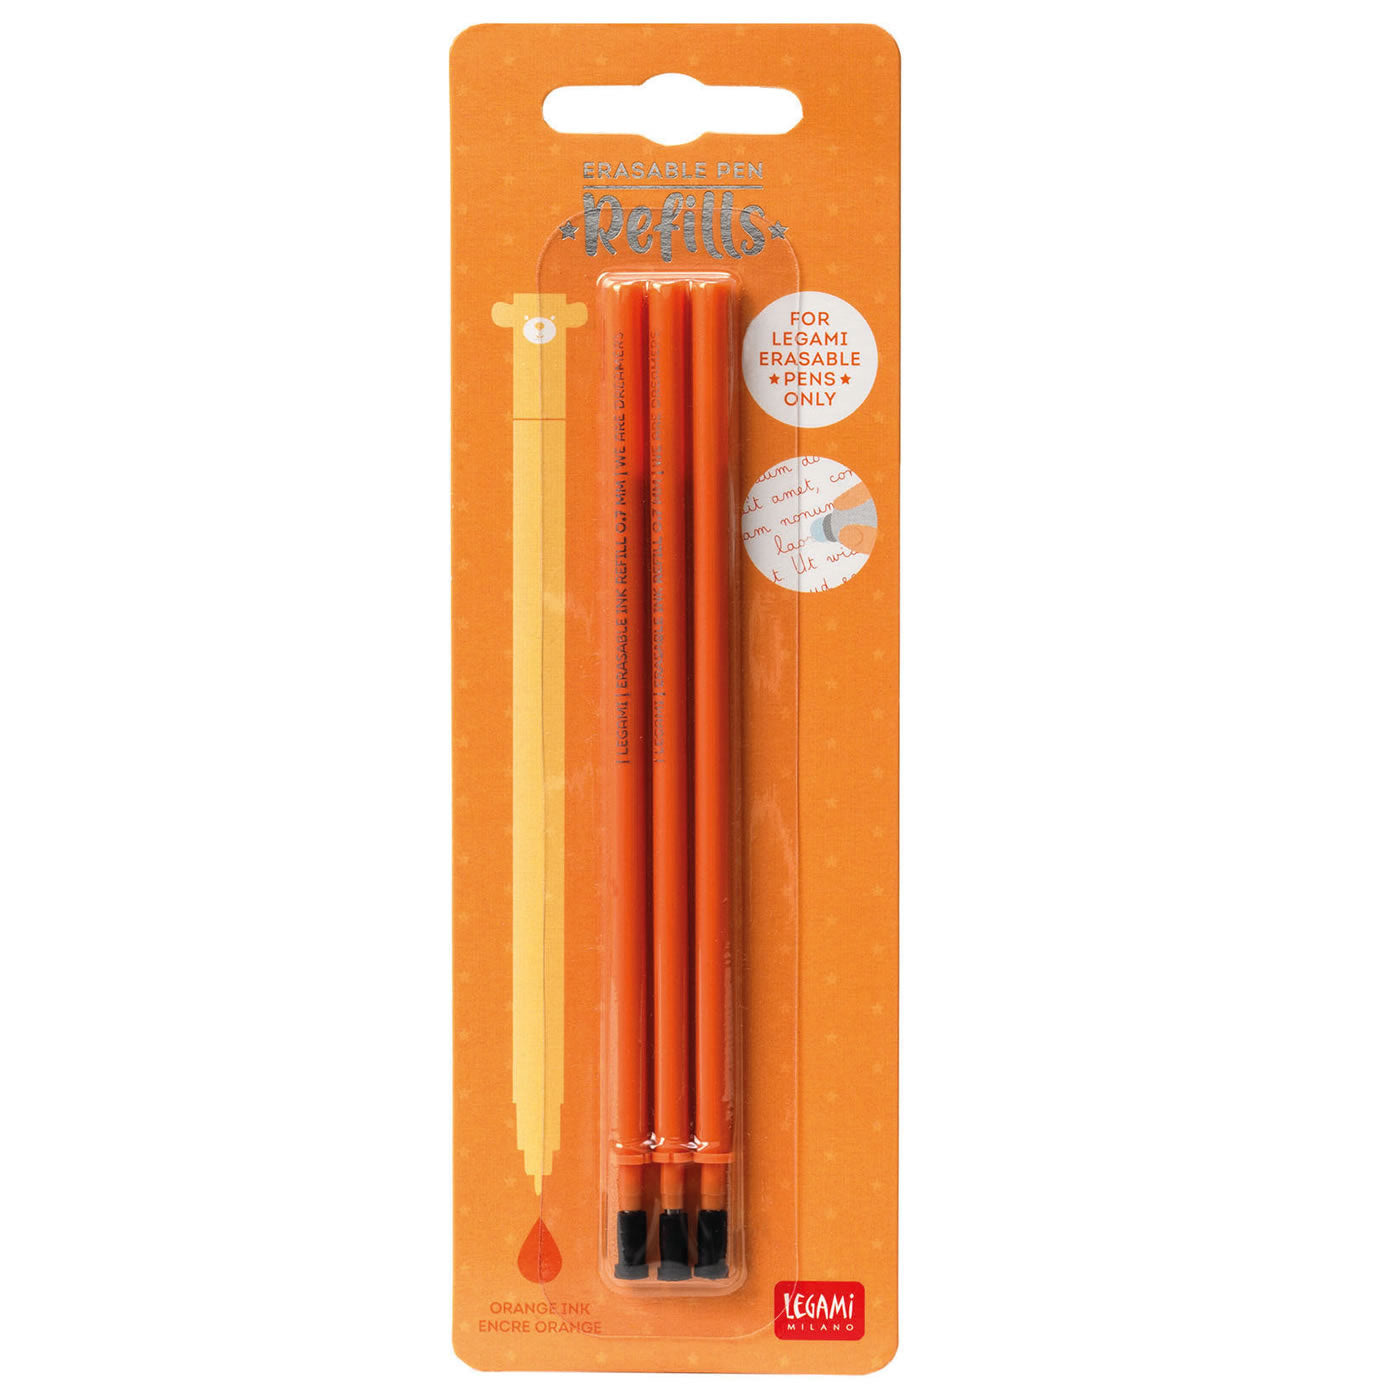 Legami Orange Erasable Gel Pen Refills - 3 Pack